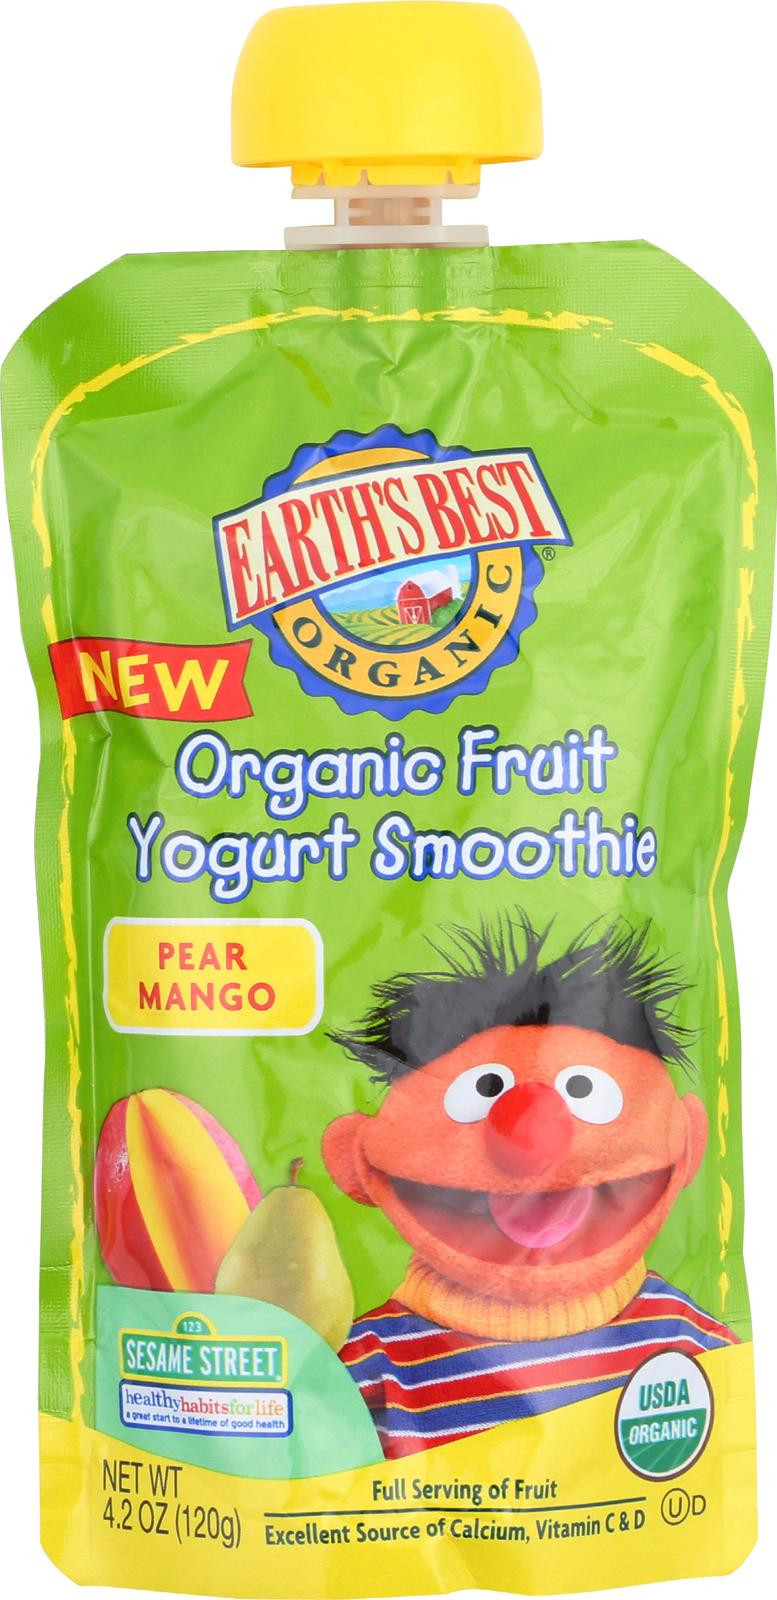 Organic Fruit Smoothies
 Earth’s Best Organic Fruit Yogurt Smoothie – Pear Mango